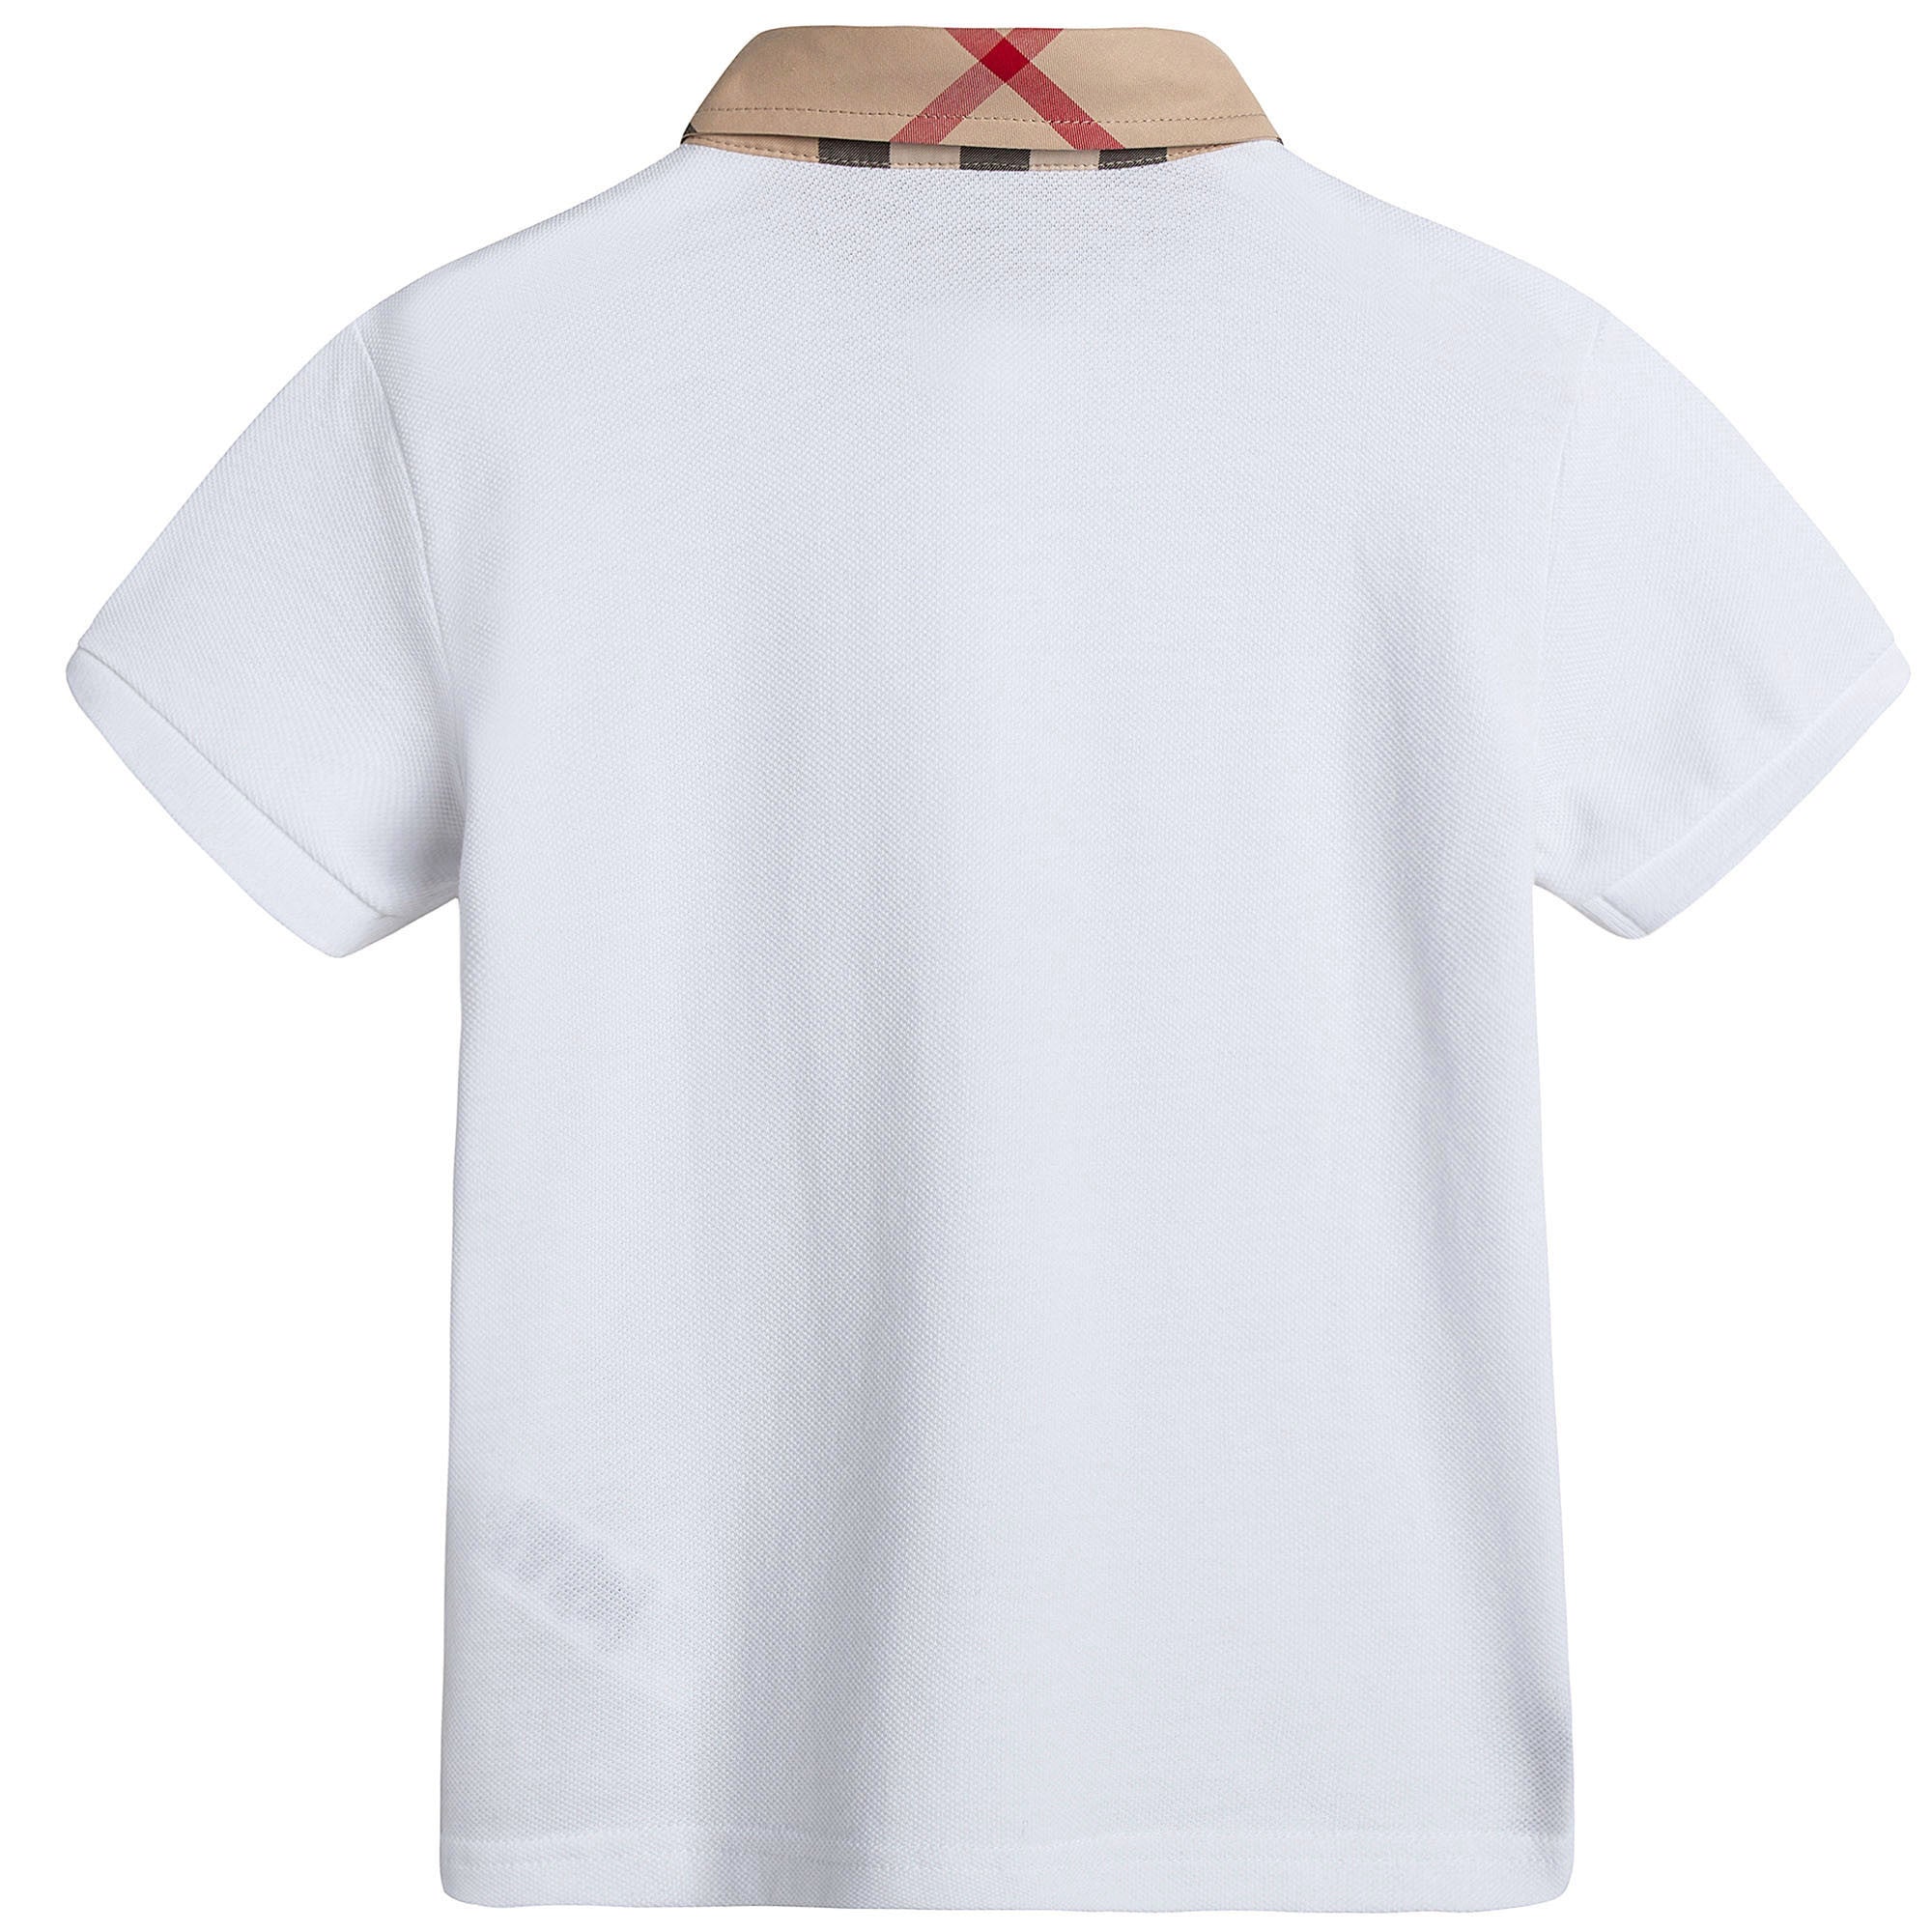 Boys White Cotton Polo Shirt With Checked Collar - CÉMAROSE | Children's Fashion Store - 2